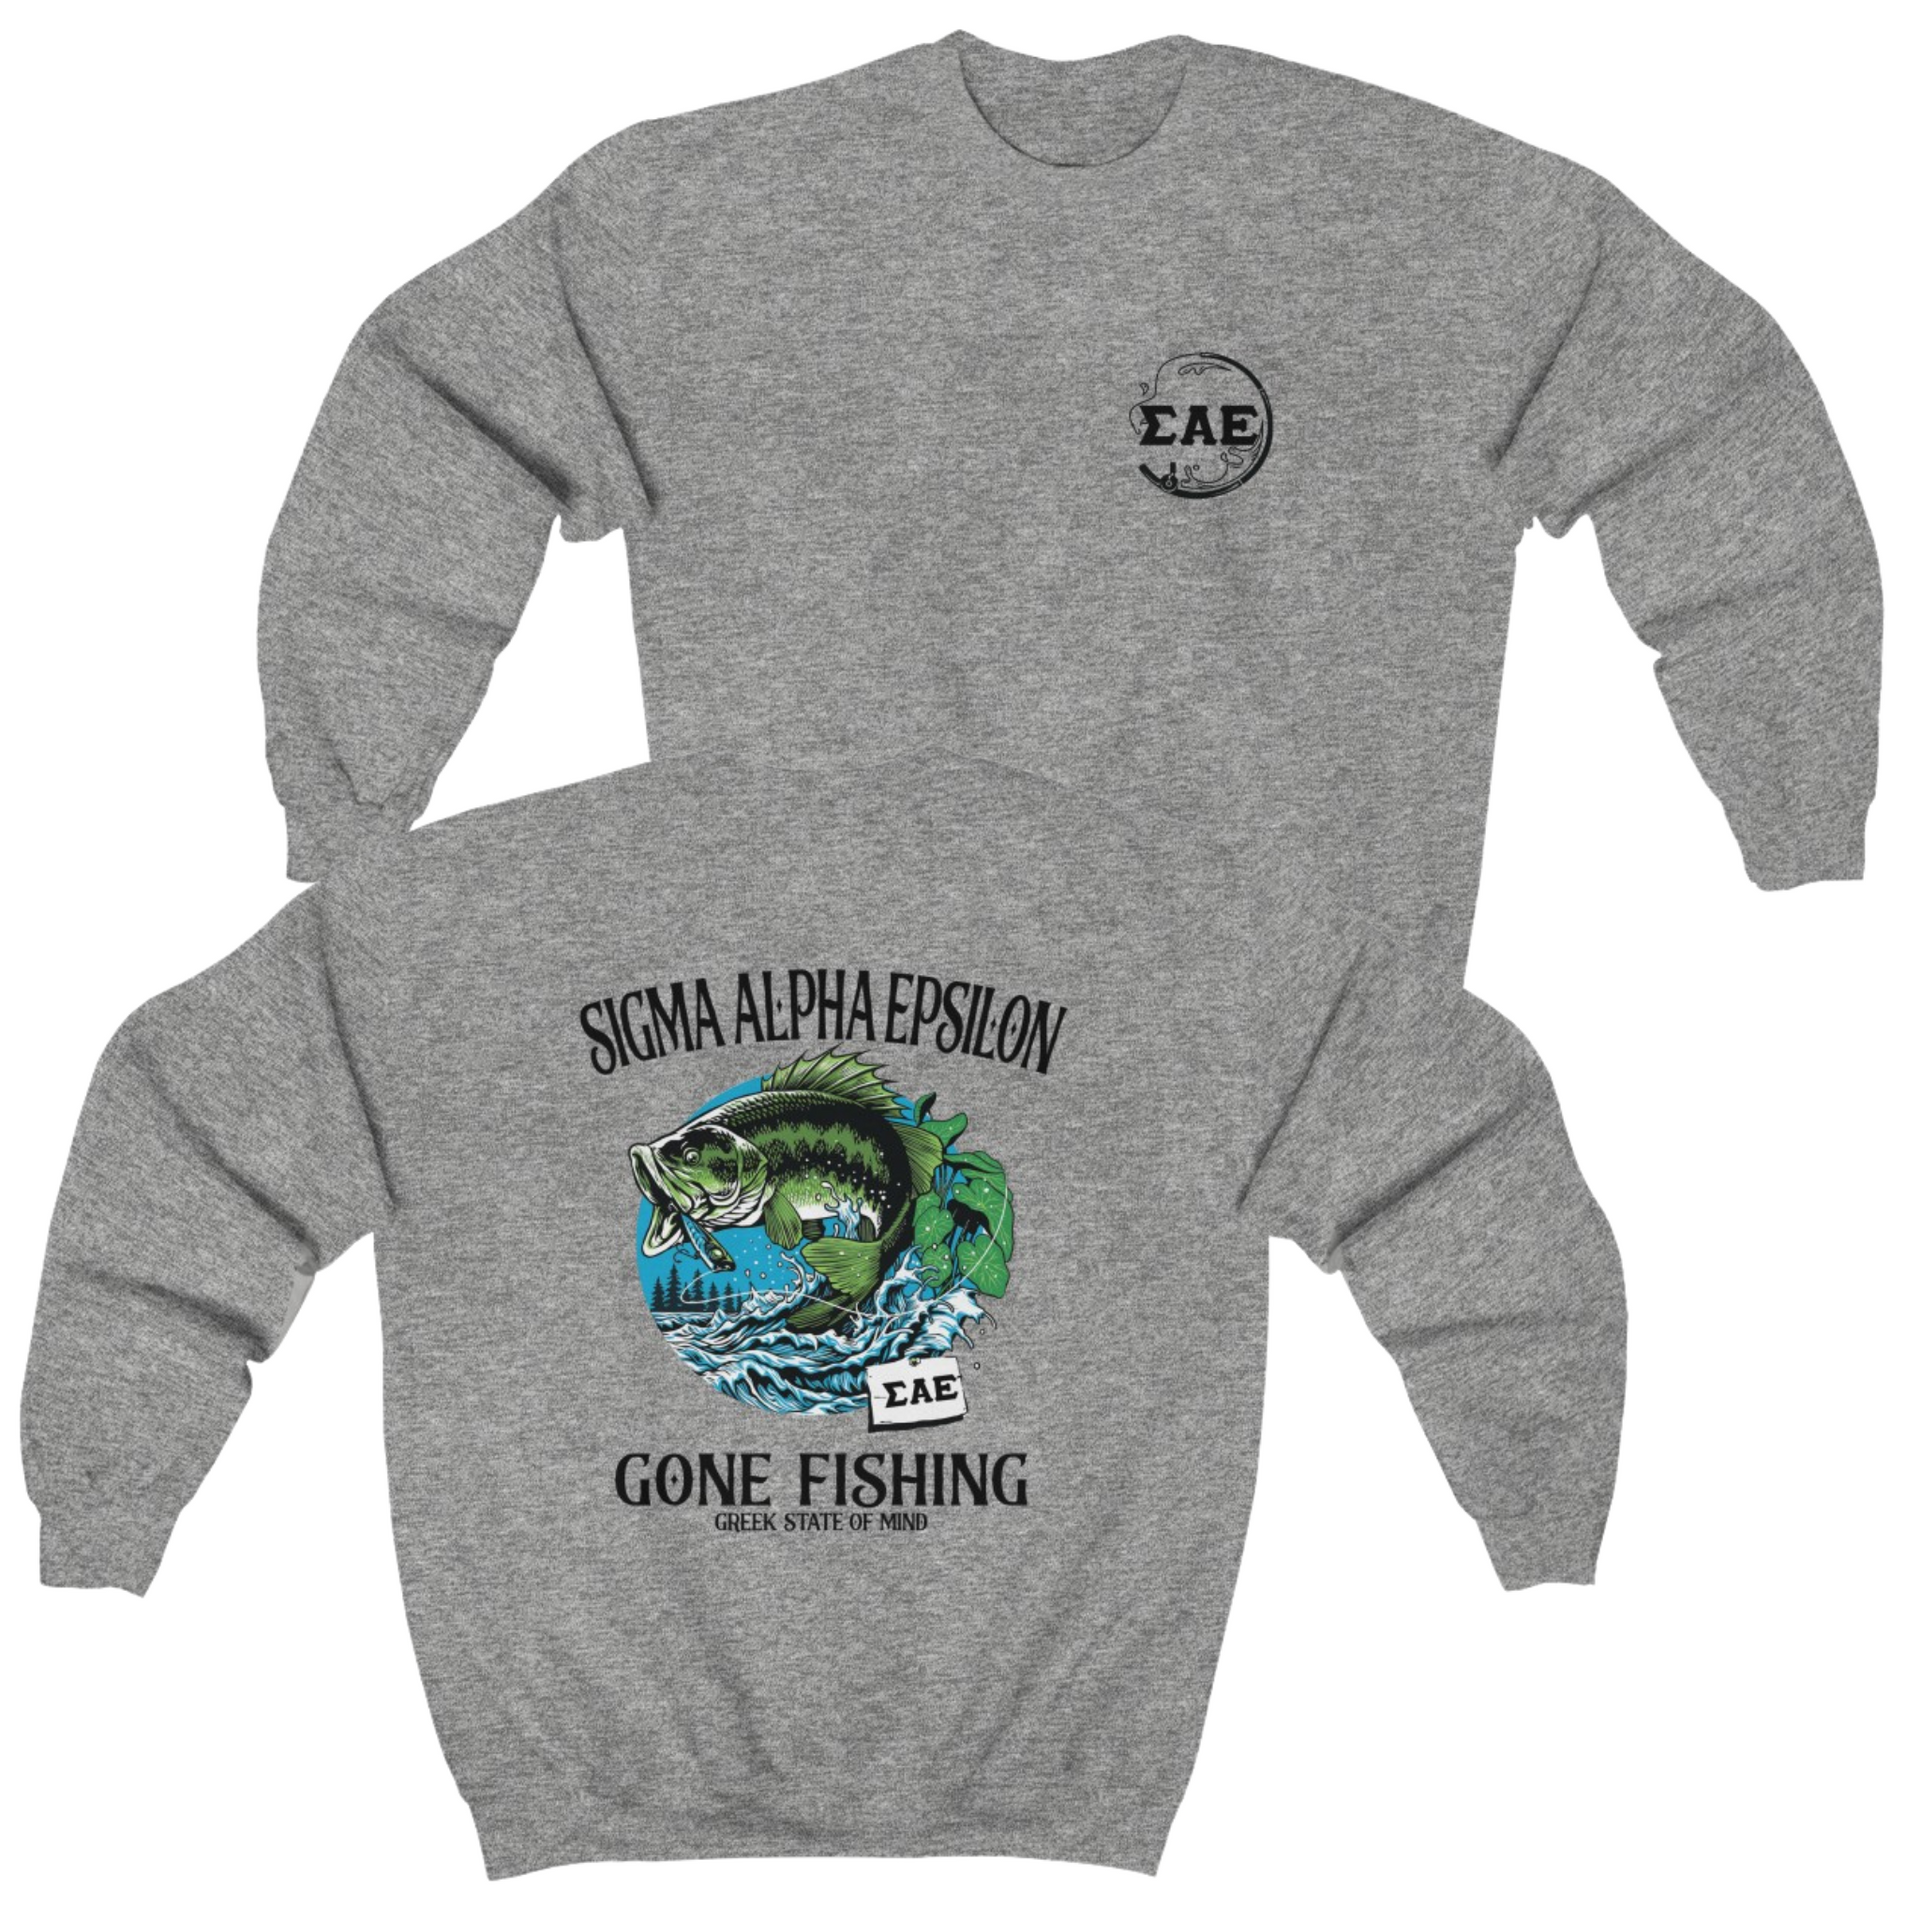 Grey Sigma Alpha Epsilon Graphic Crewneck Sweatshirt | Gone Fishing | Sigma Alpha Epsilon Clothing and Merchandise